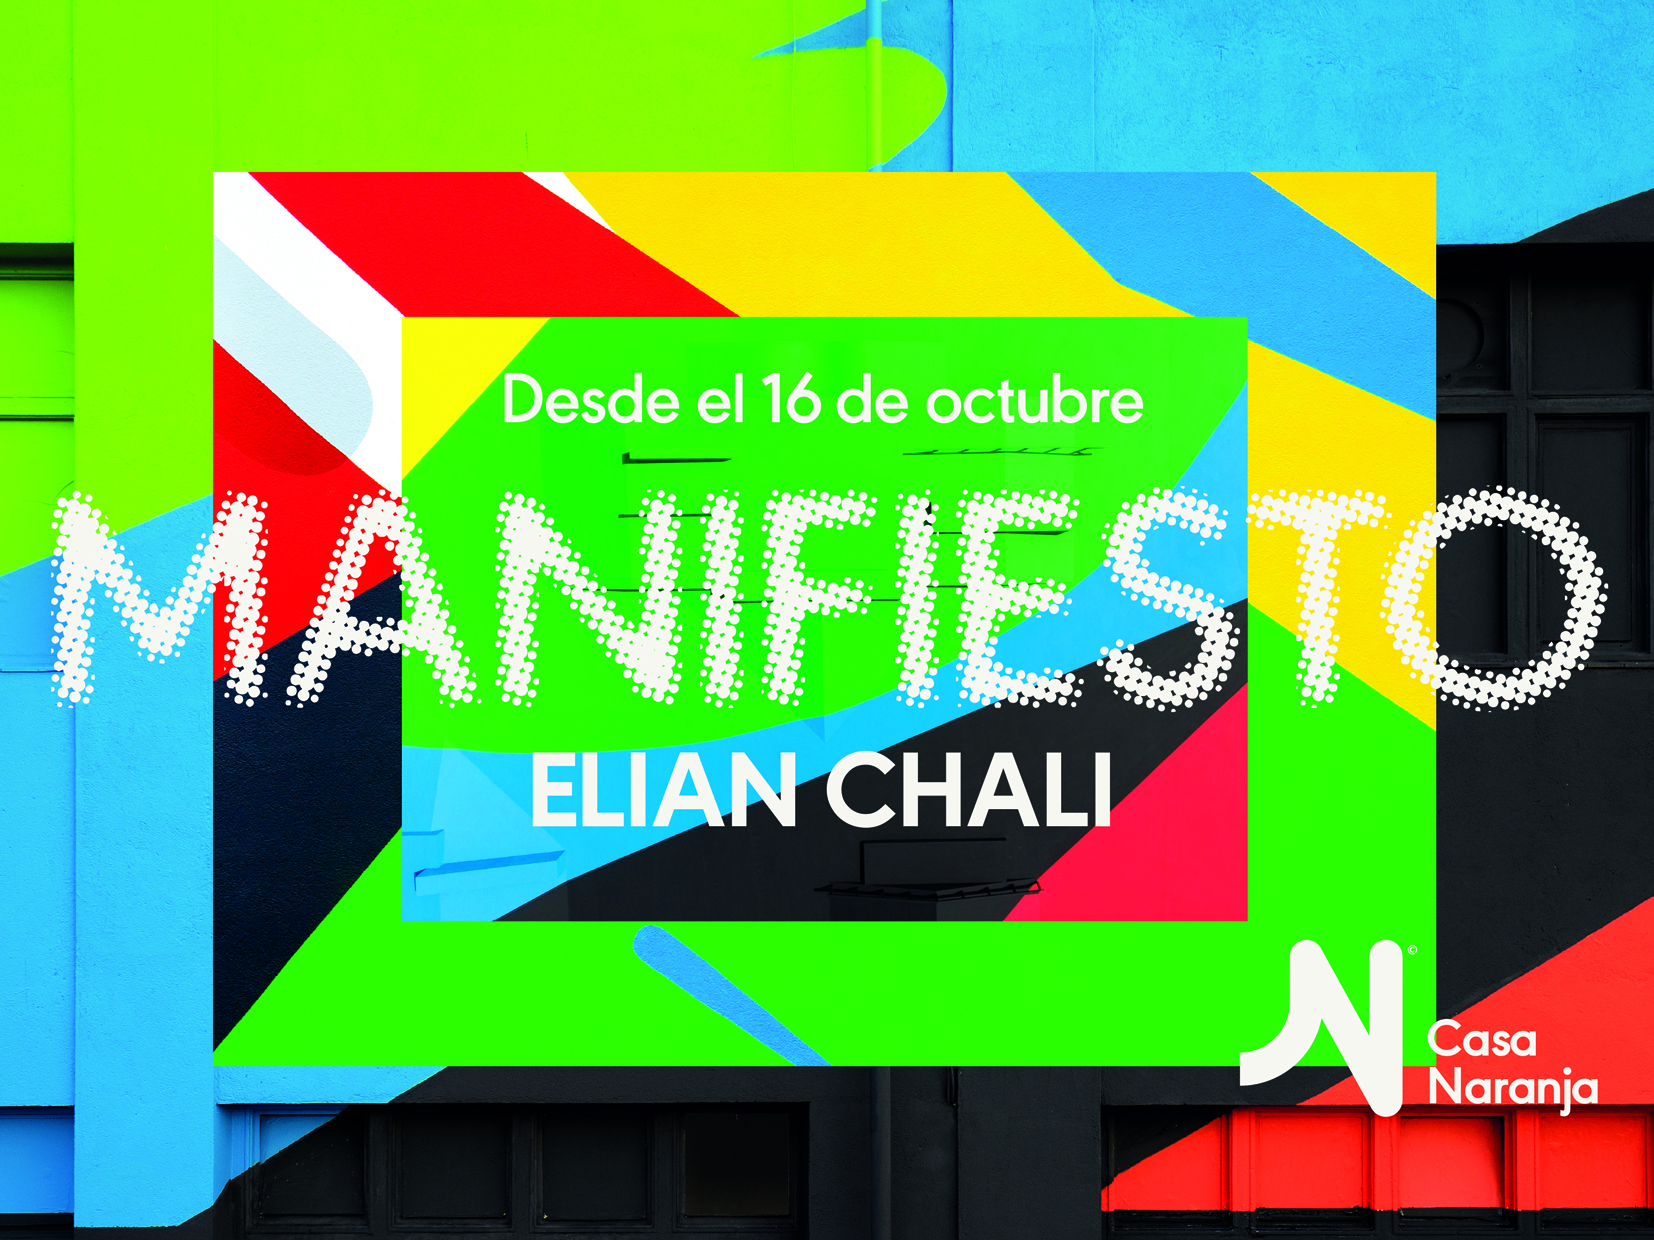 MANIFIESTO - Elian Chali en Casa Naranja - OYR